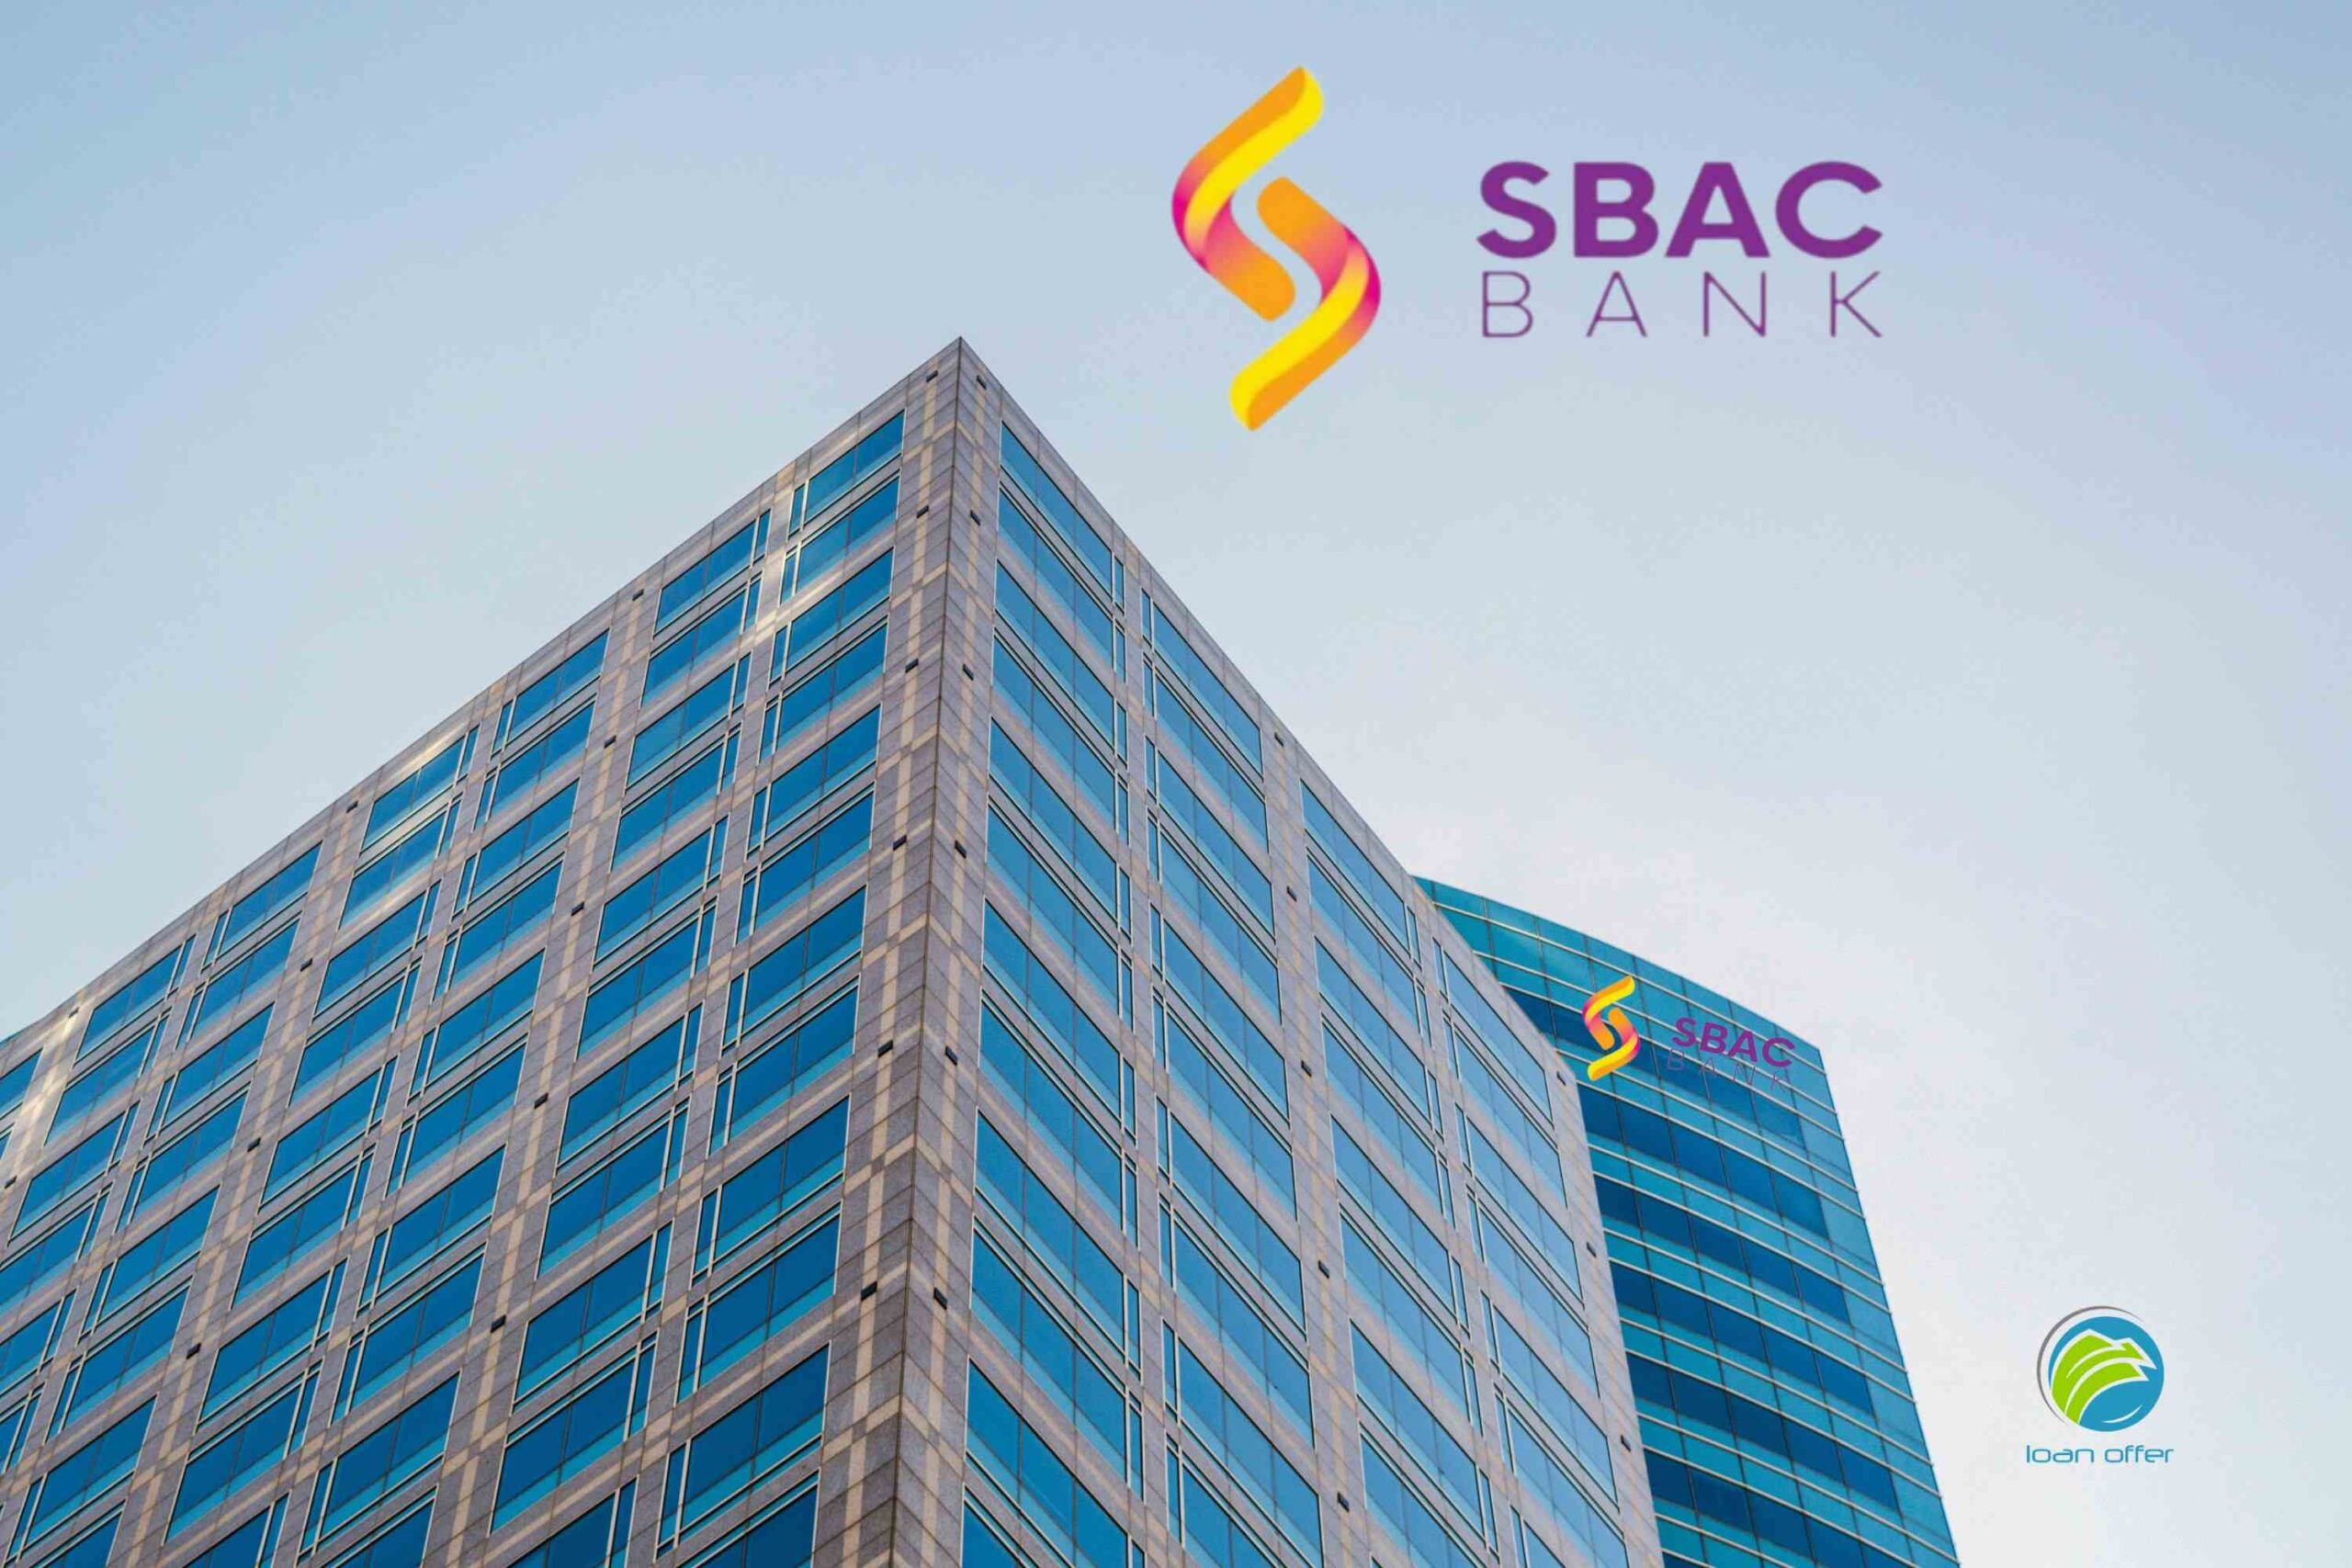 SBAC Bank Limited